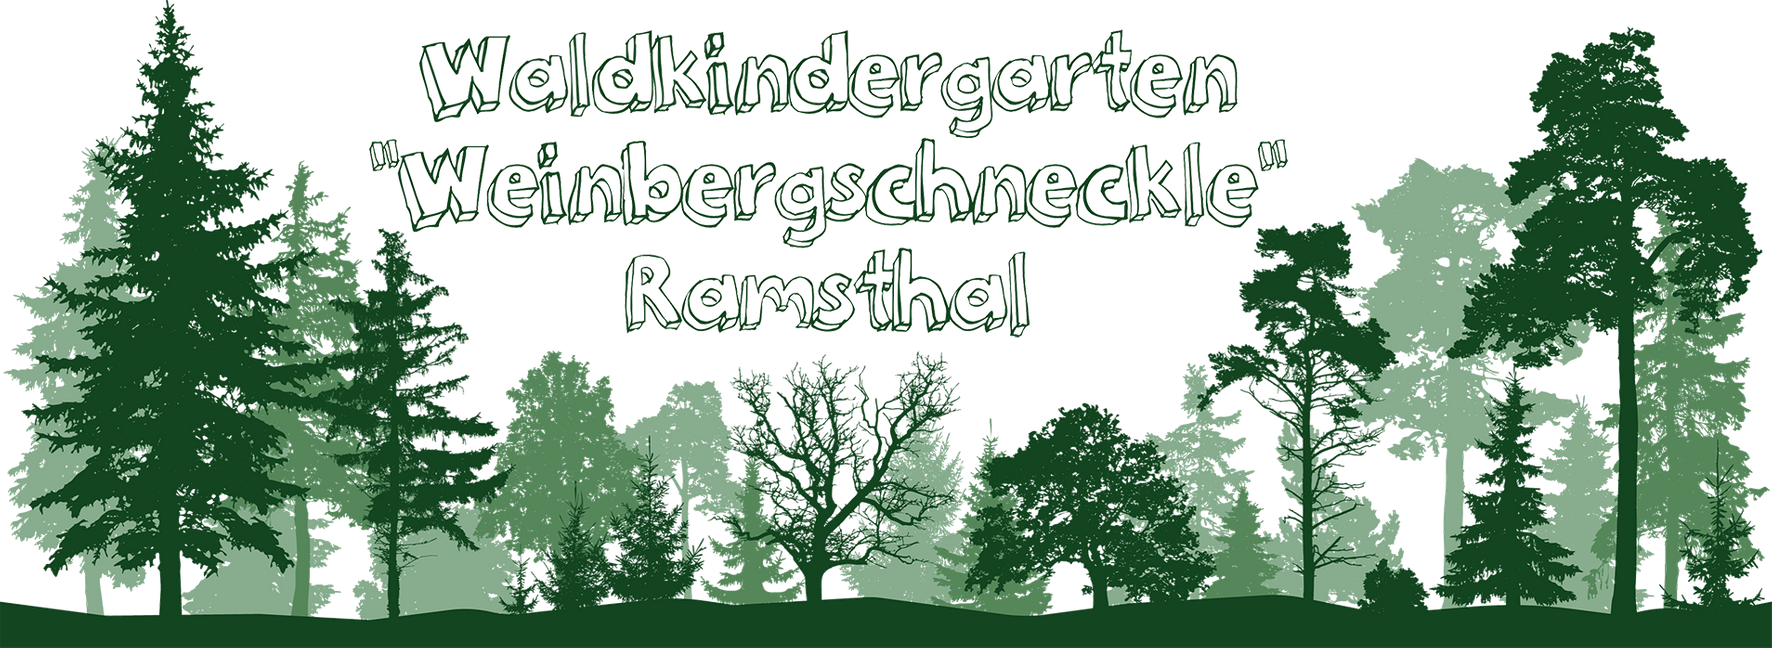 Waldkindergarten Ramsthal